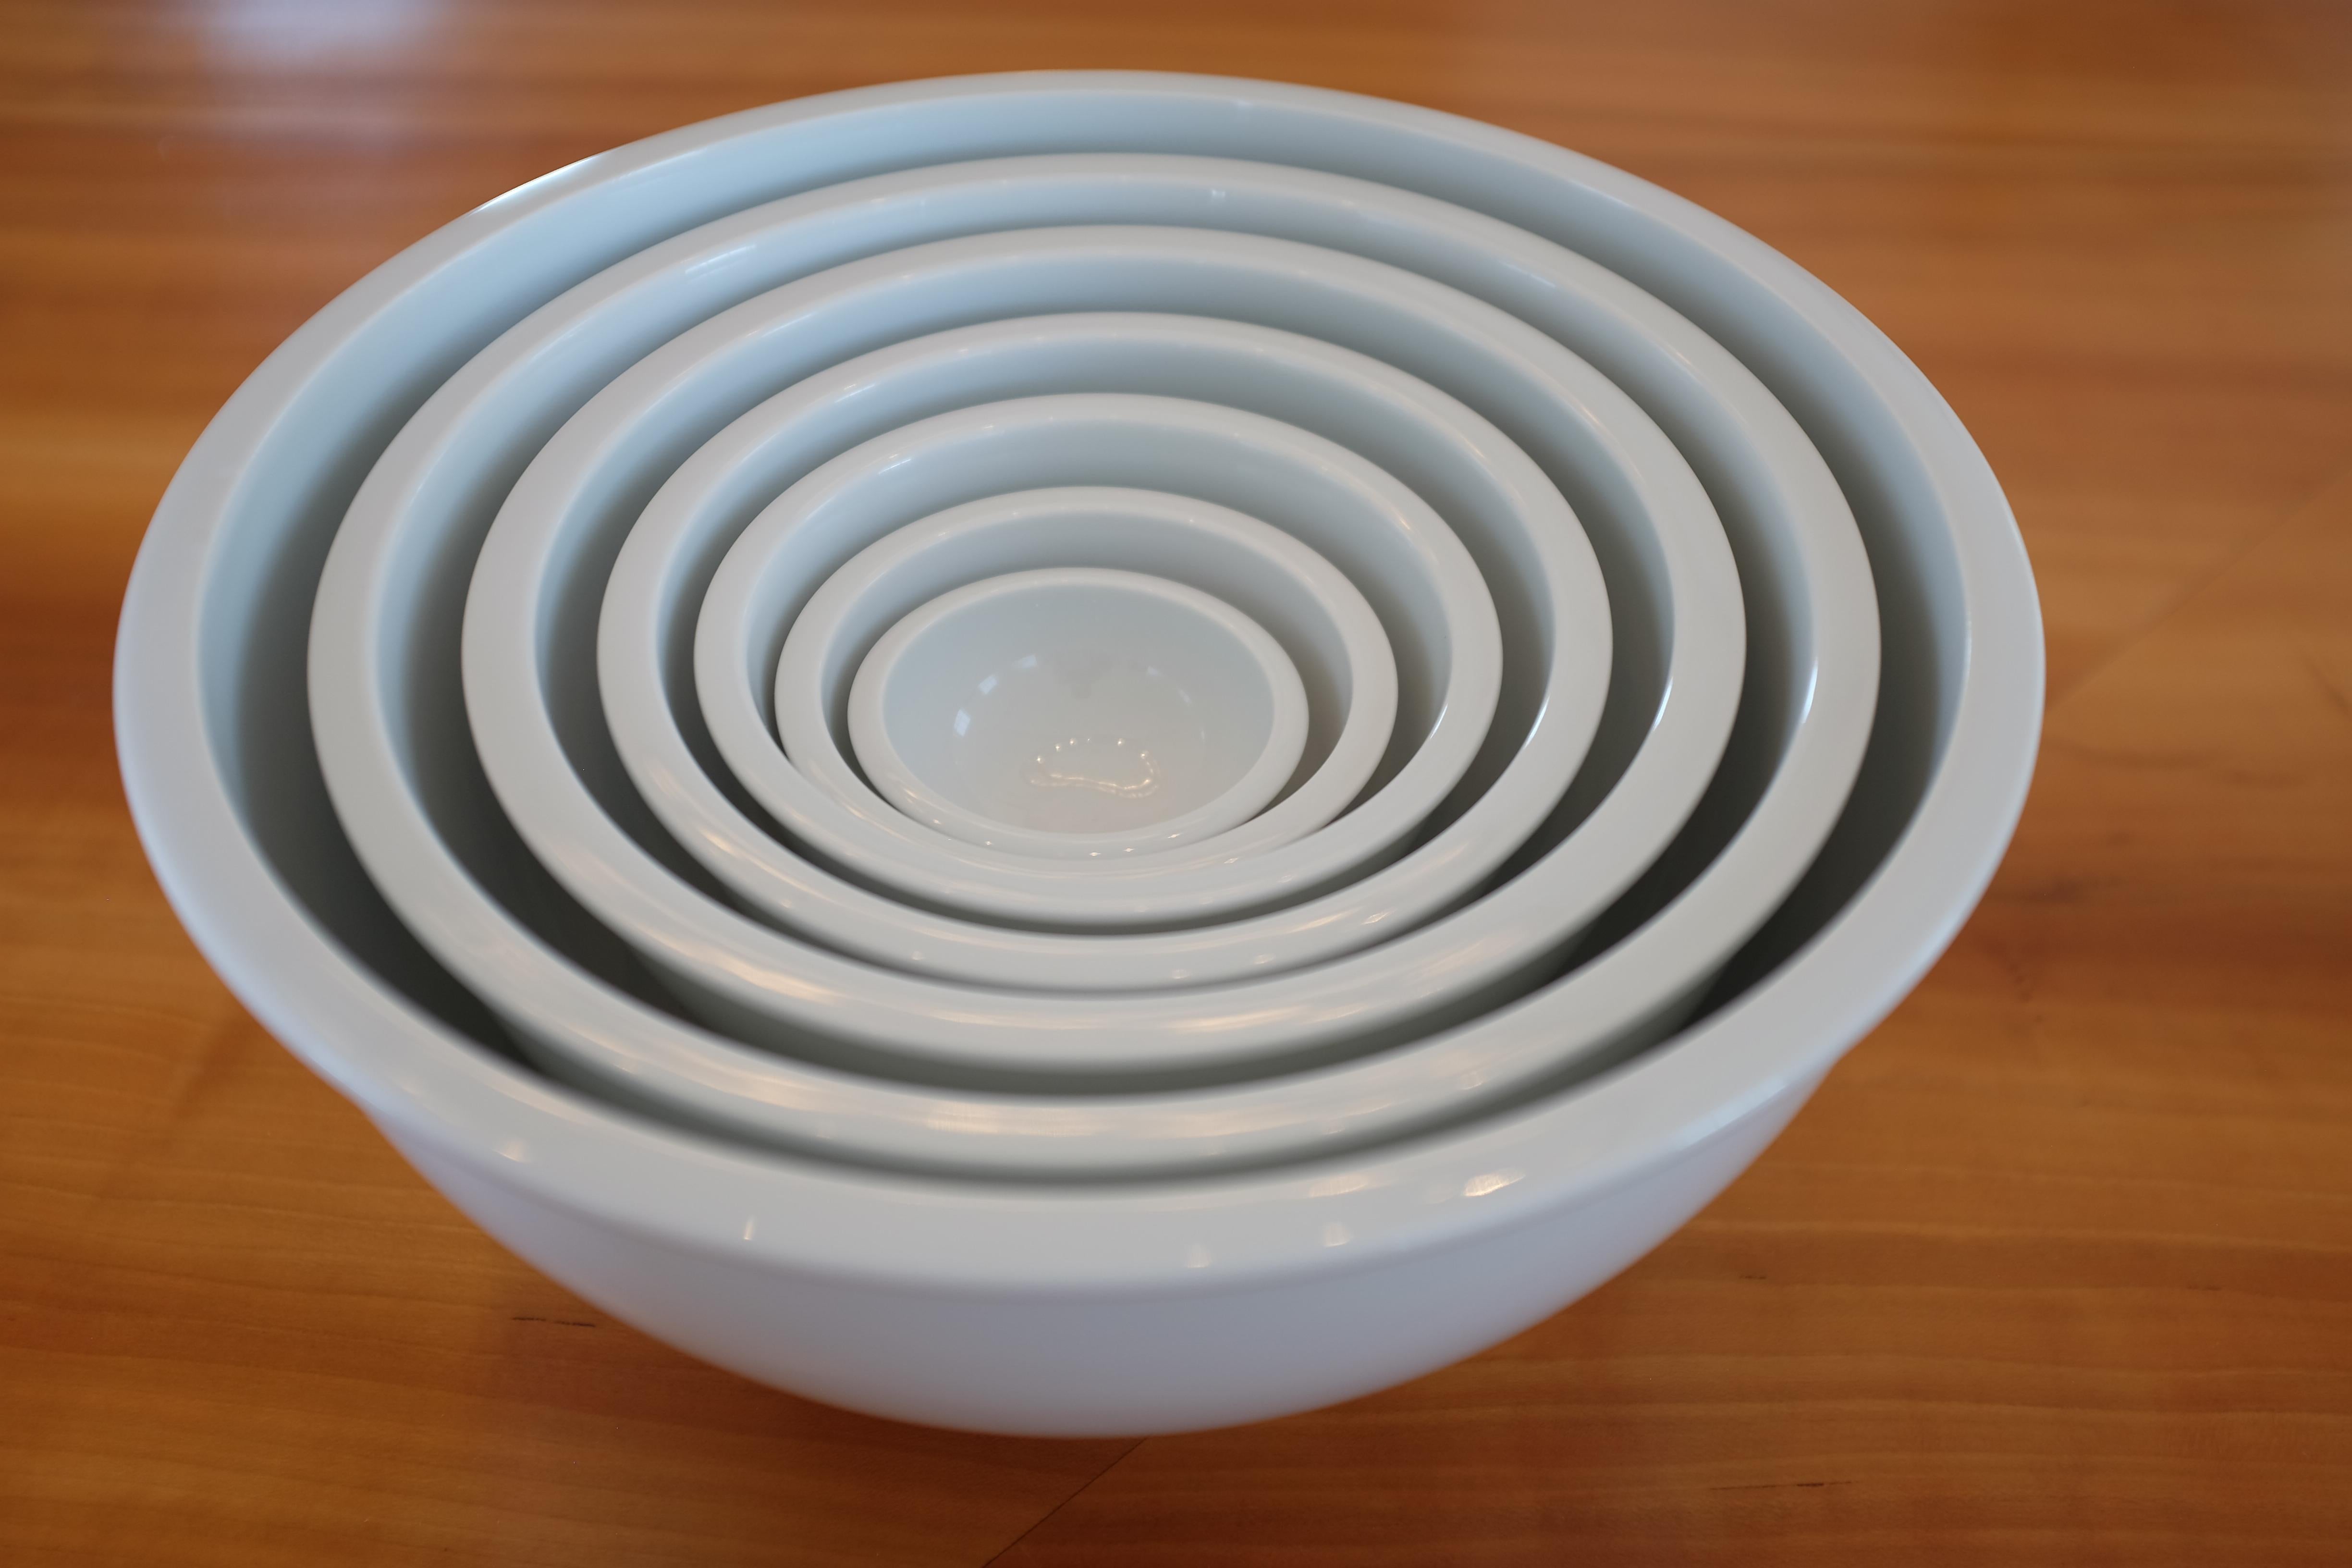 Expression - Set of 7 bowls

Design by Pieter Stockmans

Porcelain nesting bowls, handmade in Belgium.
Measures:
Ø07 cm

Ø10 cm

Ø13 cm

Ø16 cm

Ø20 cm

Ø24 cm

Ø28 cm.